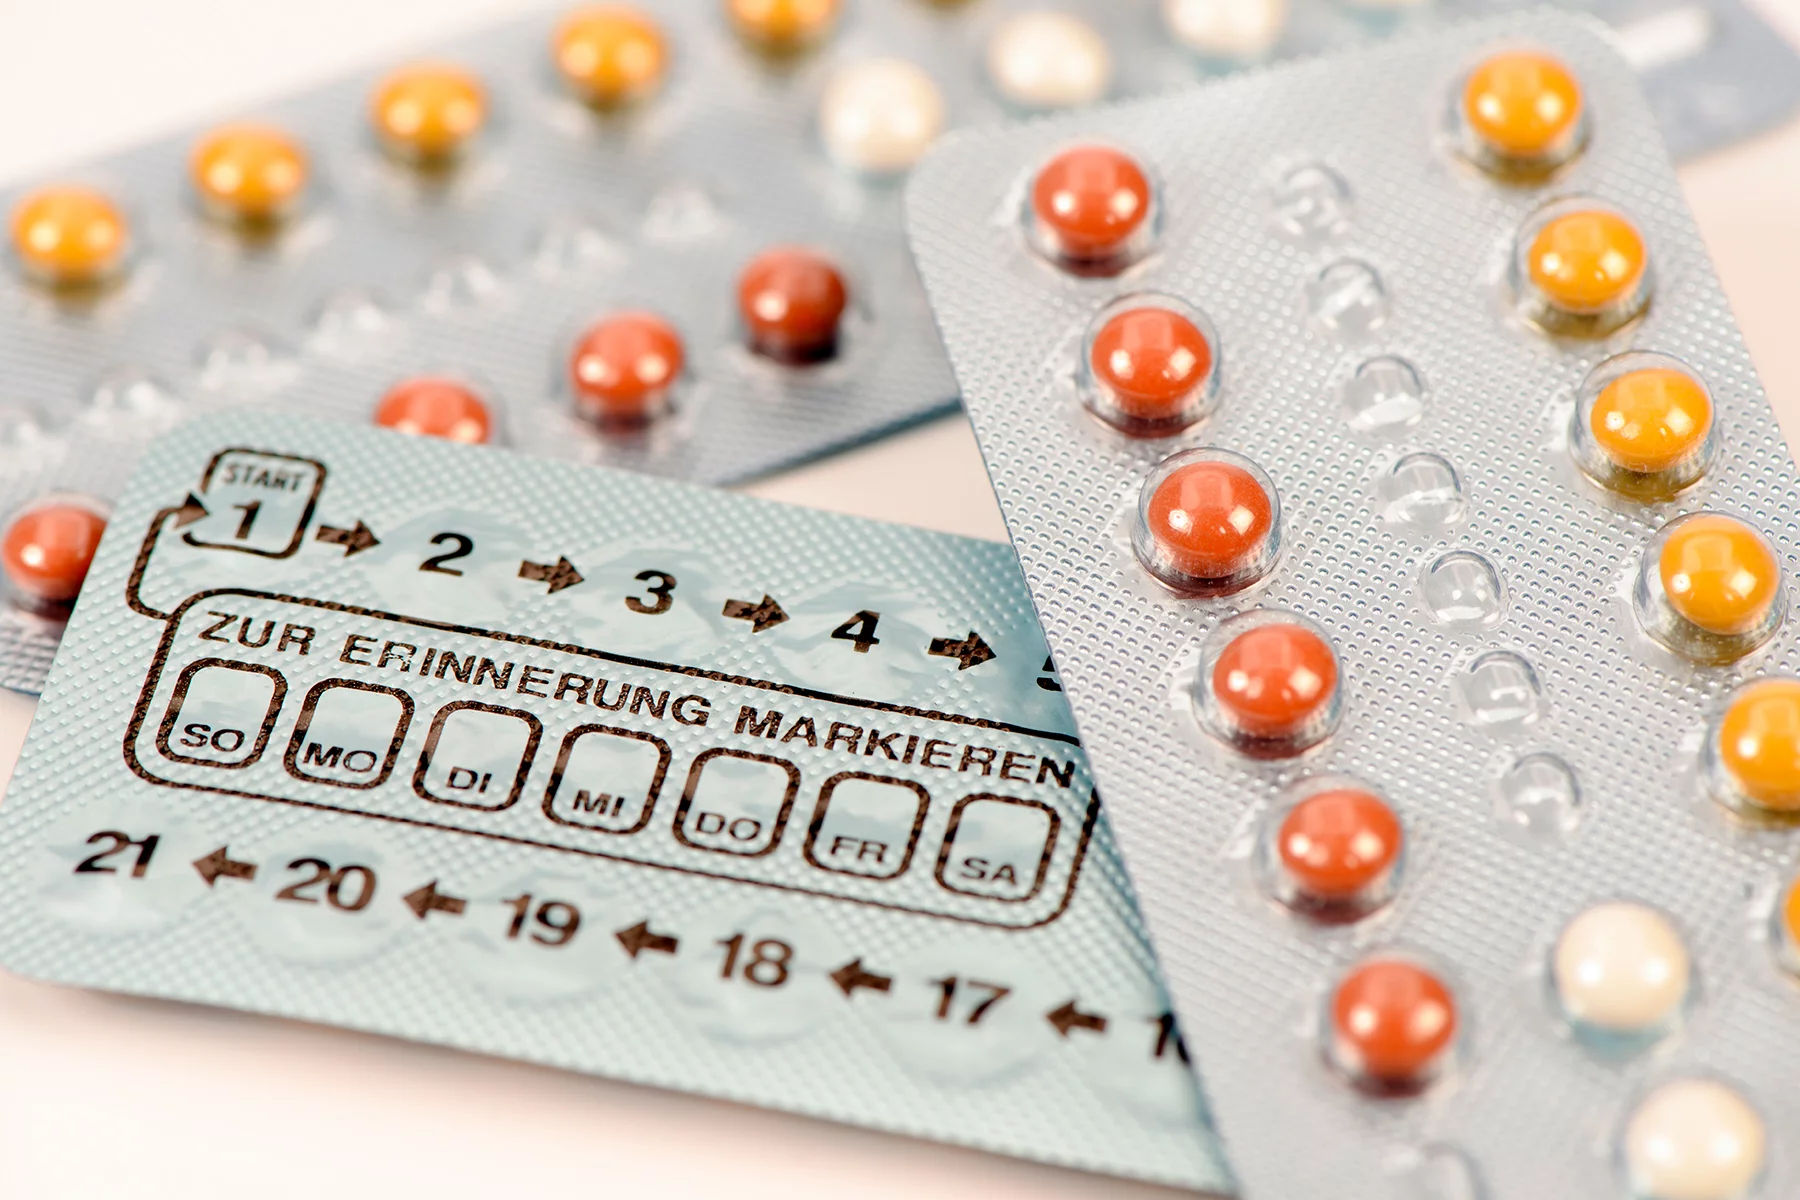 Blister packs of birth control pills